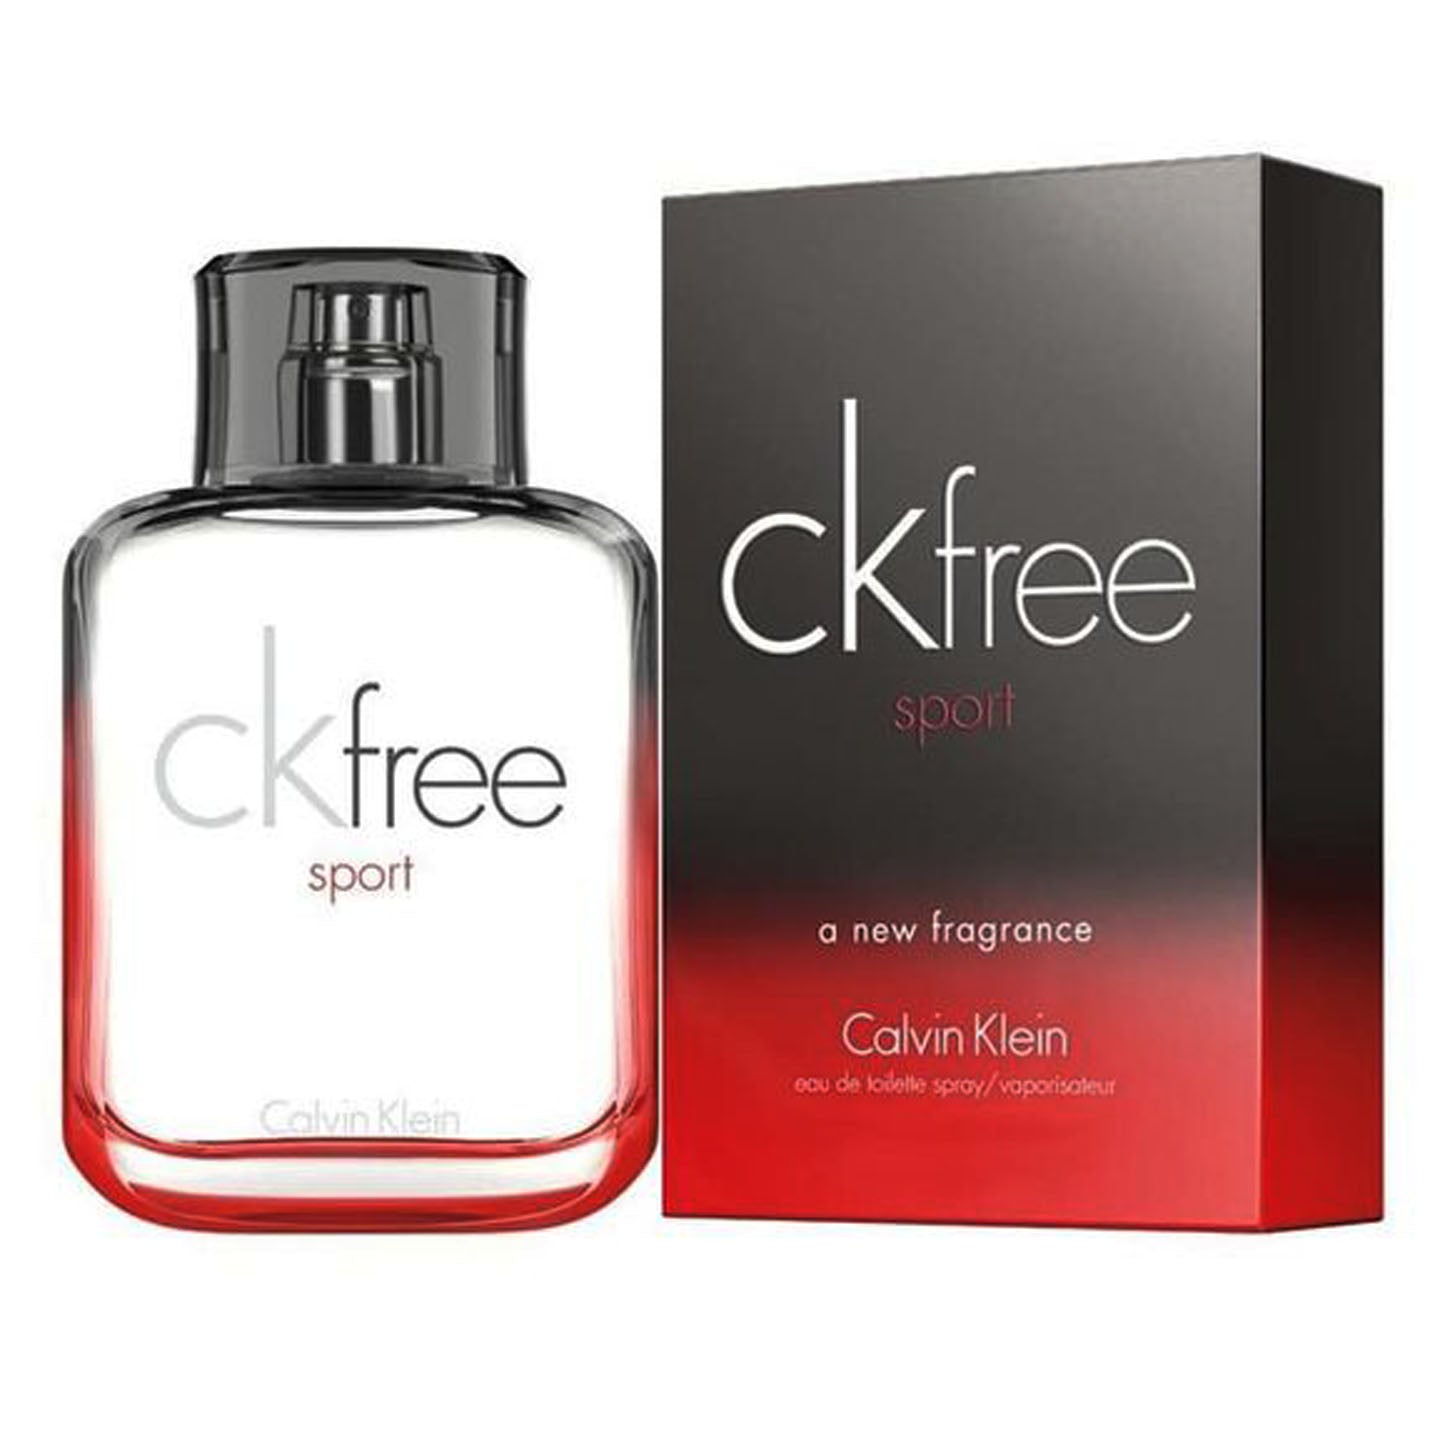 Calvin Klein CK Free Sport Eau de Toilette Spray 50 ml for Men